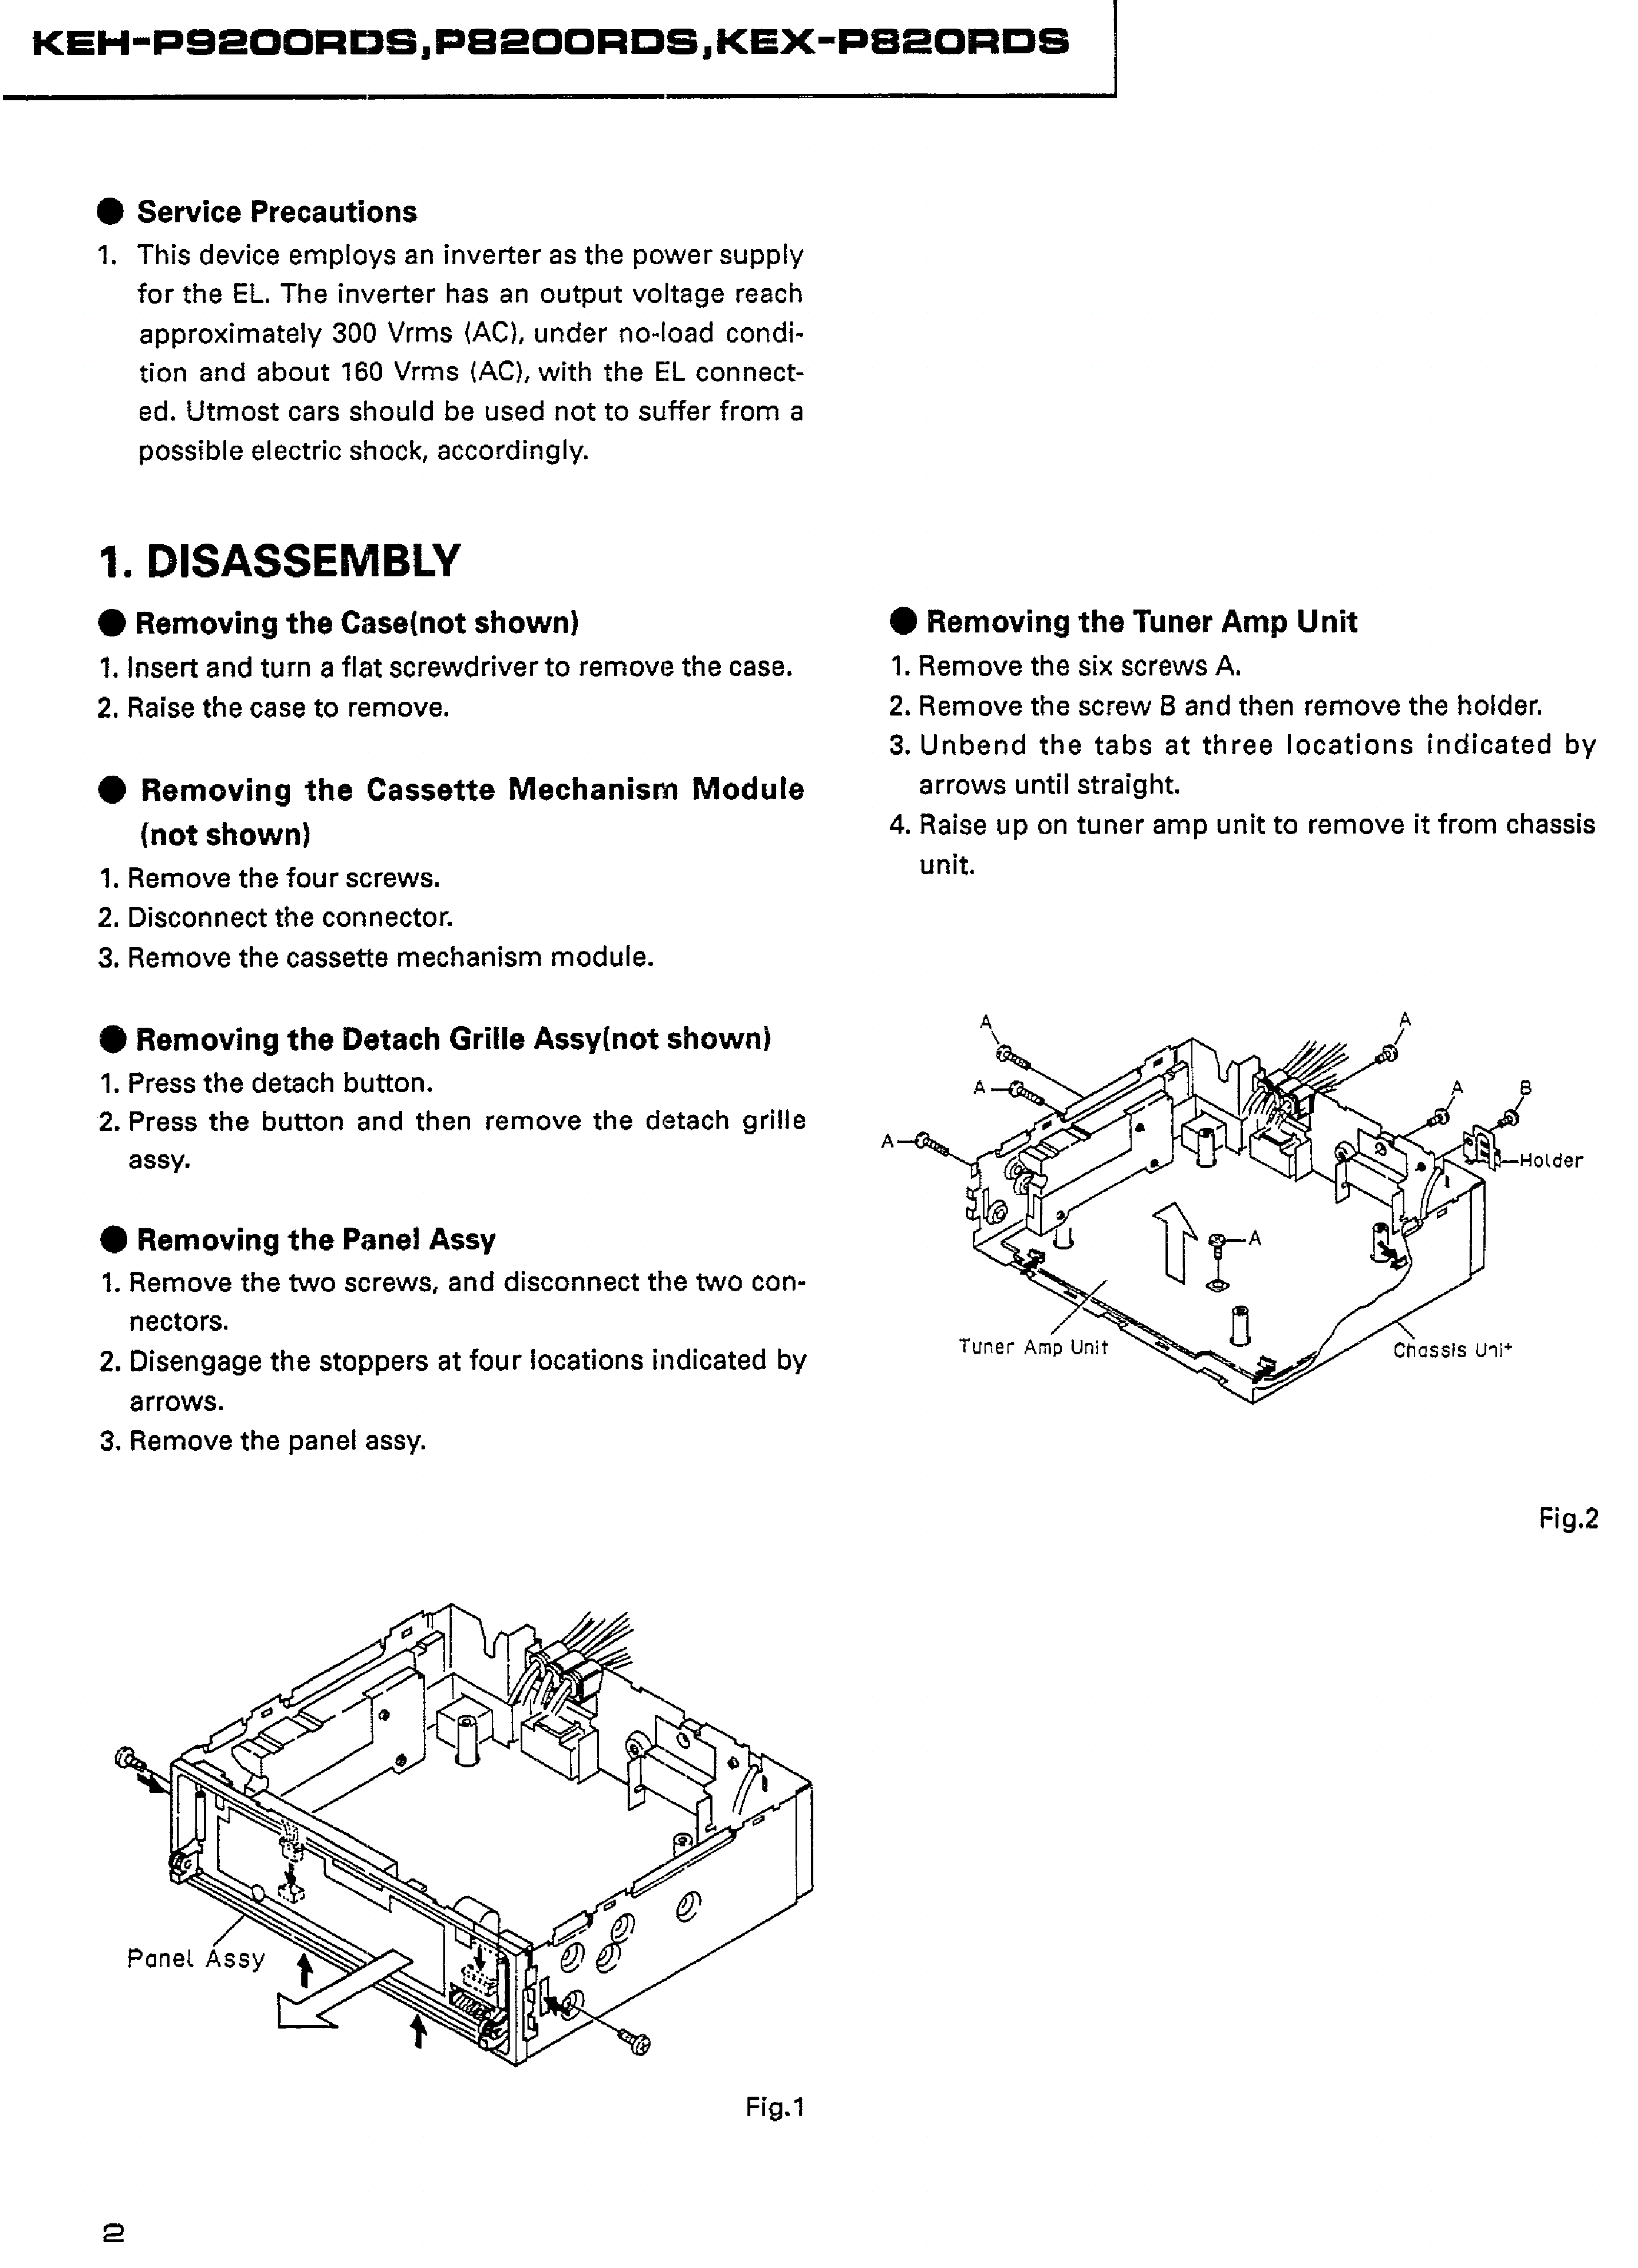 PIONEER KEH-8200 service manual (2nd page)